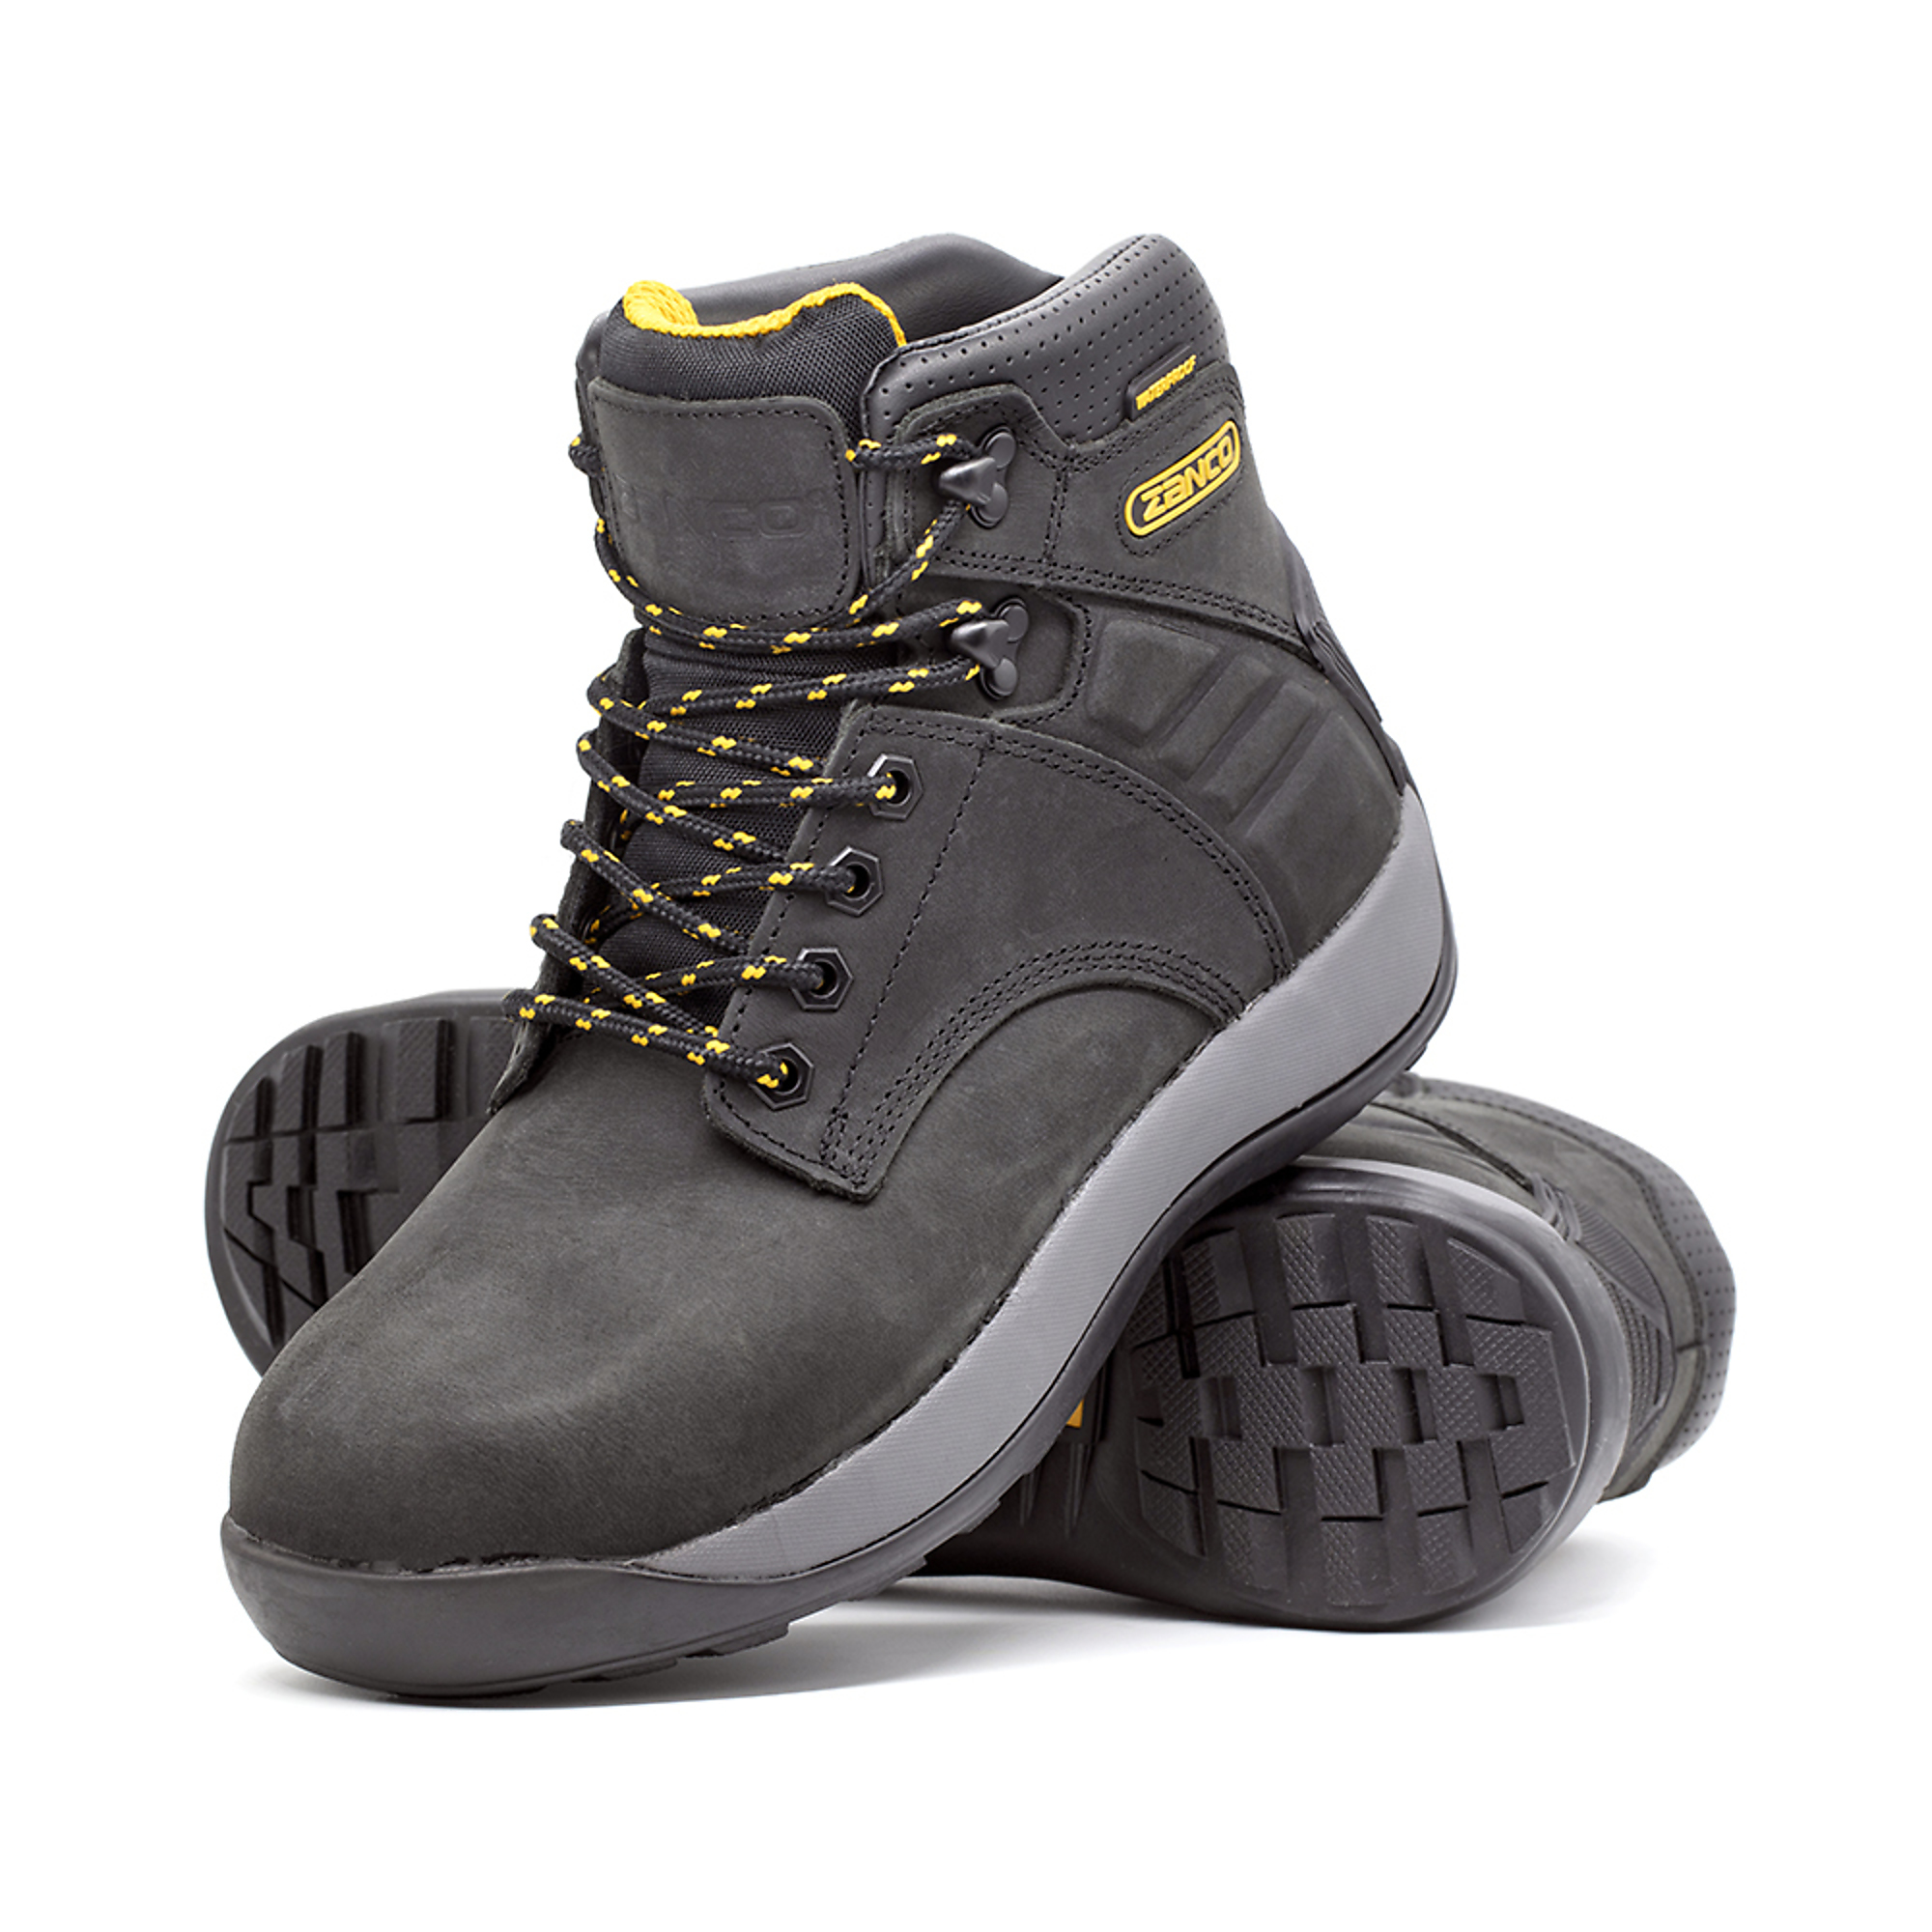 Zanco, Men's Waterproof,Steel toe,EH,Safety boots, Size 8 1/2, Width Medium, Color BLACK, Model 8236-01-8.5